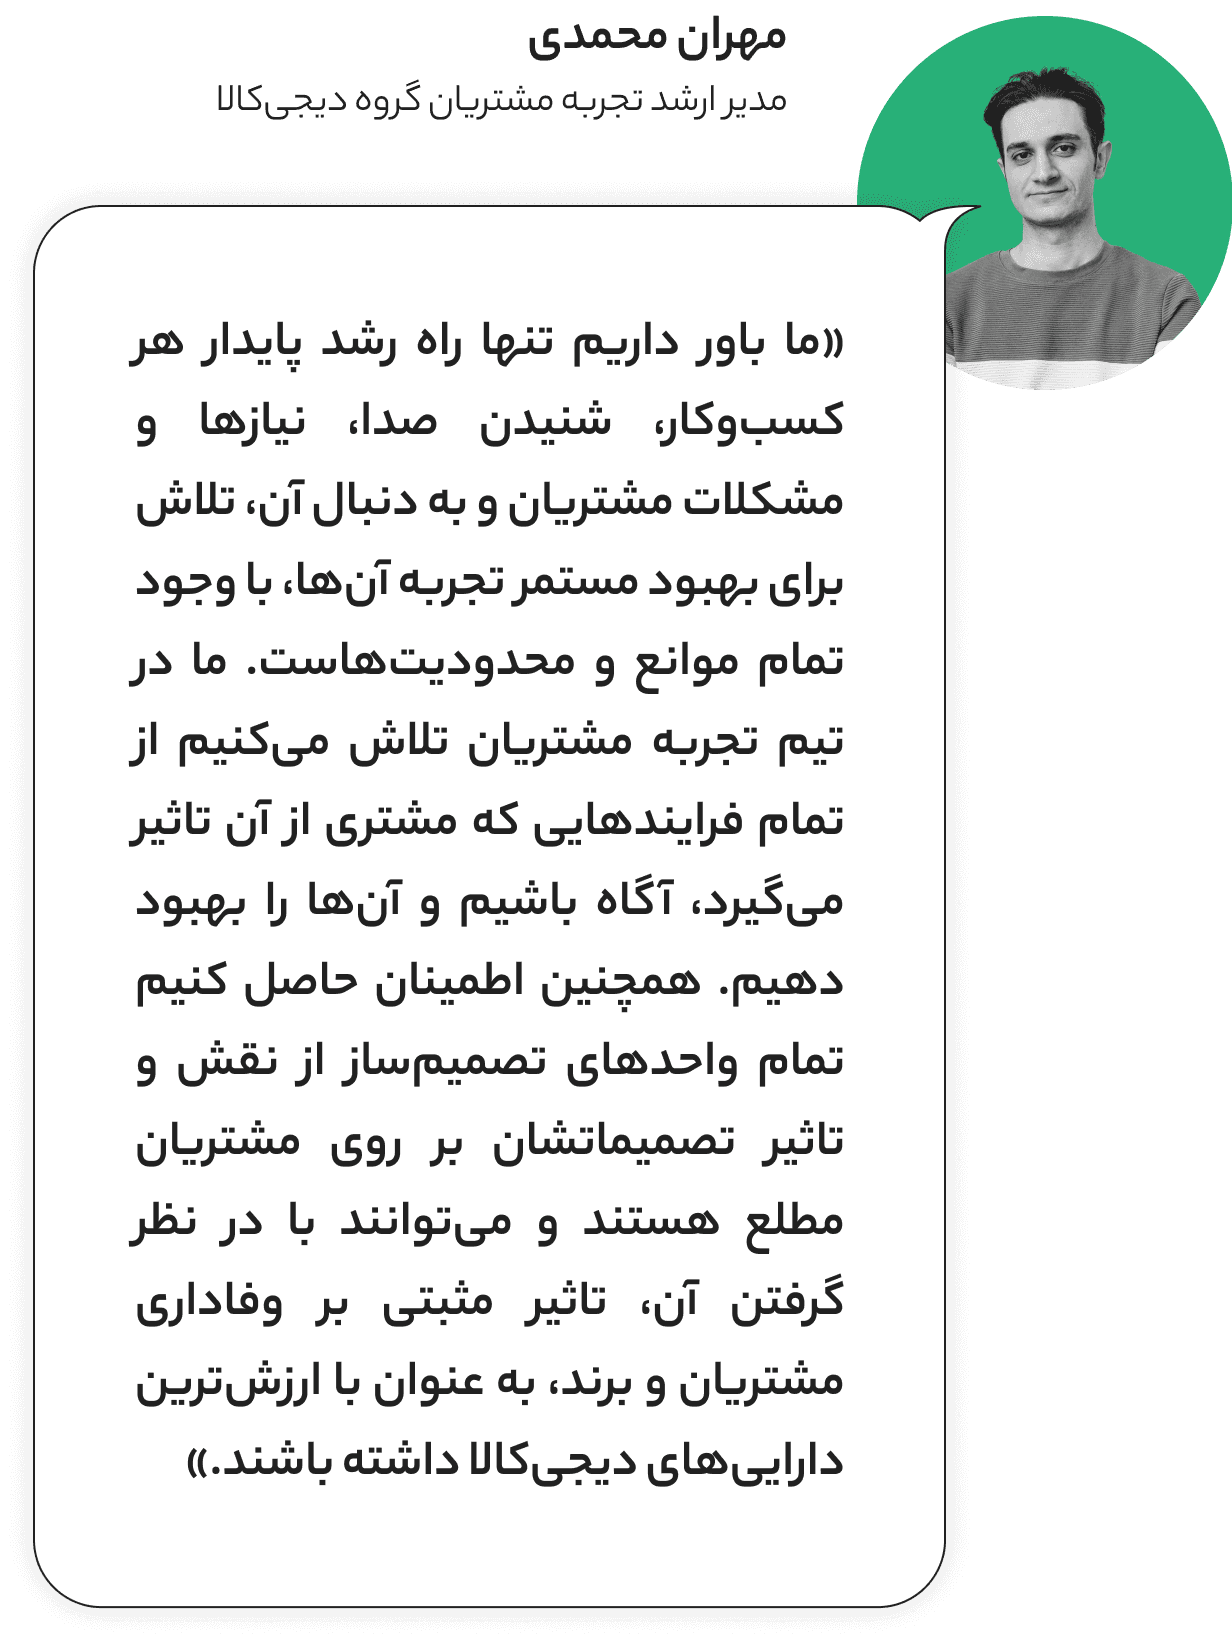 Message from Mehran Mohammadi